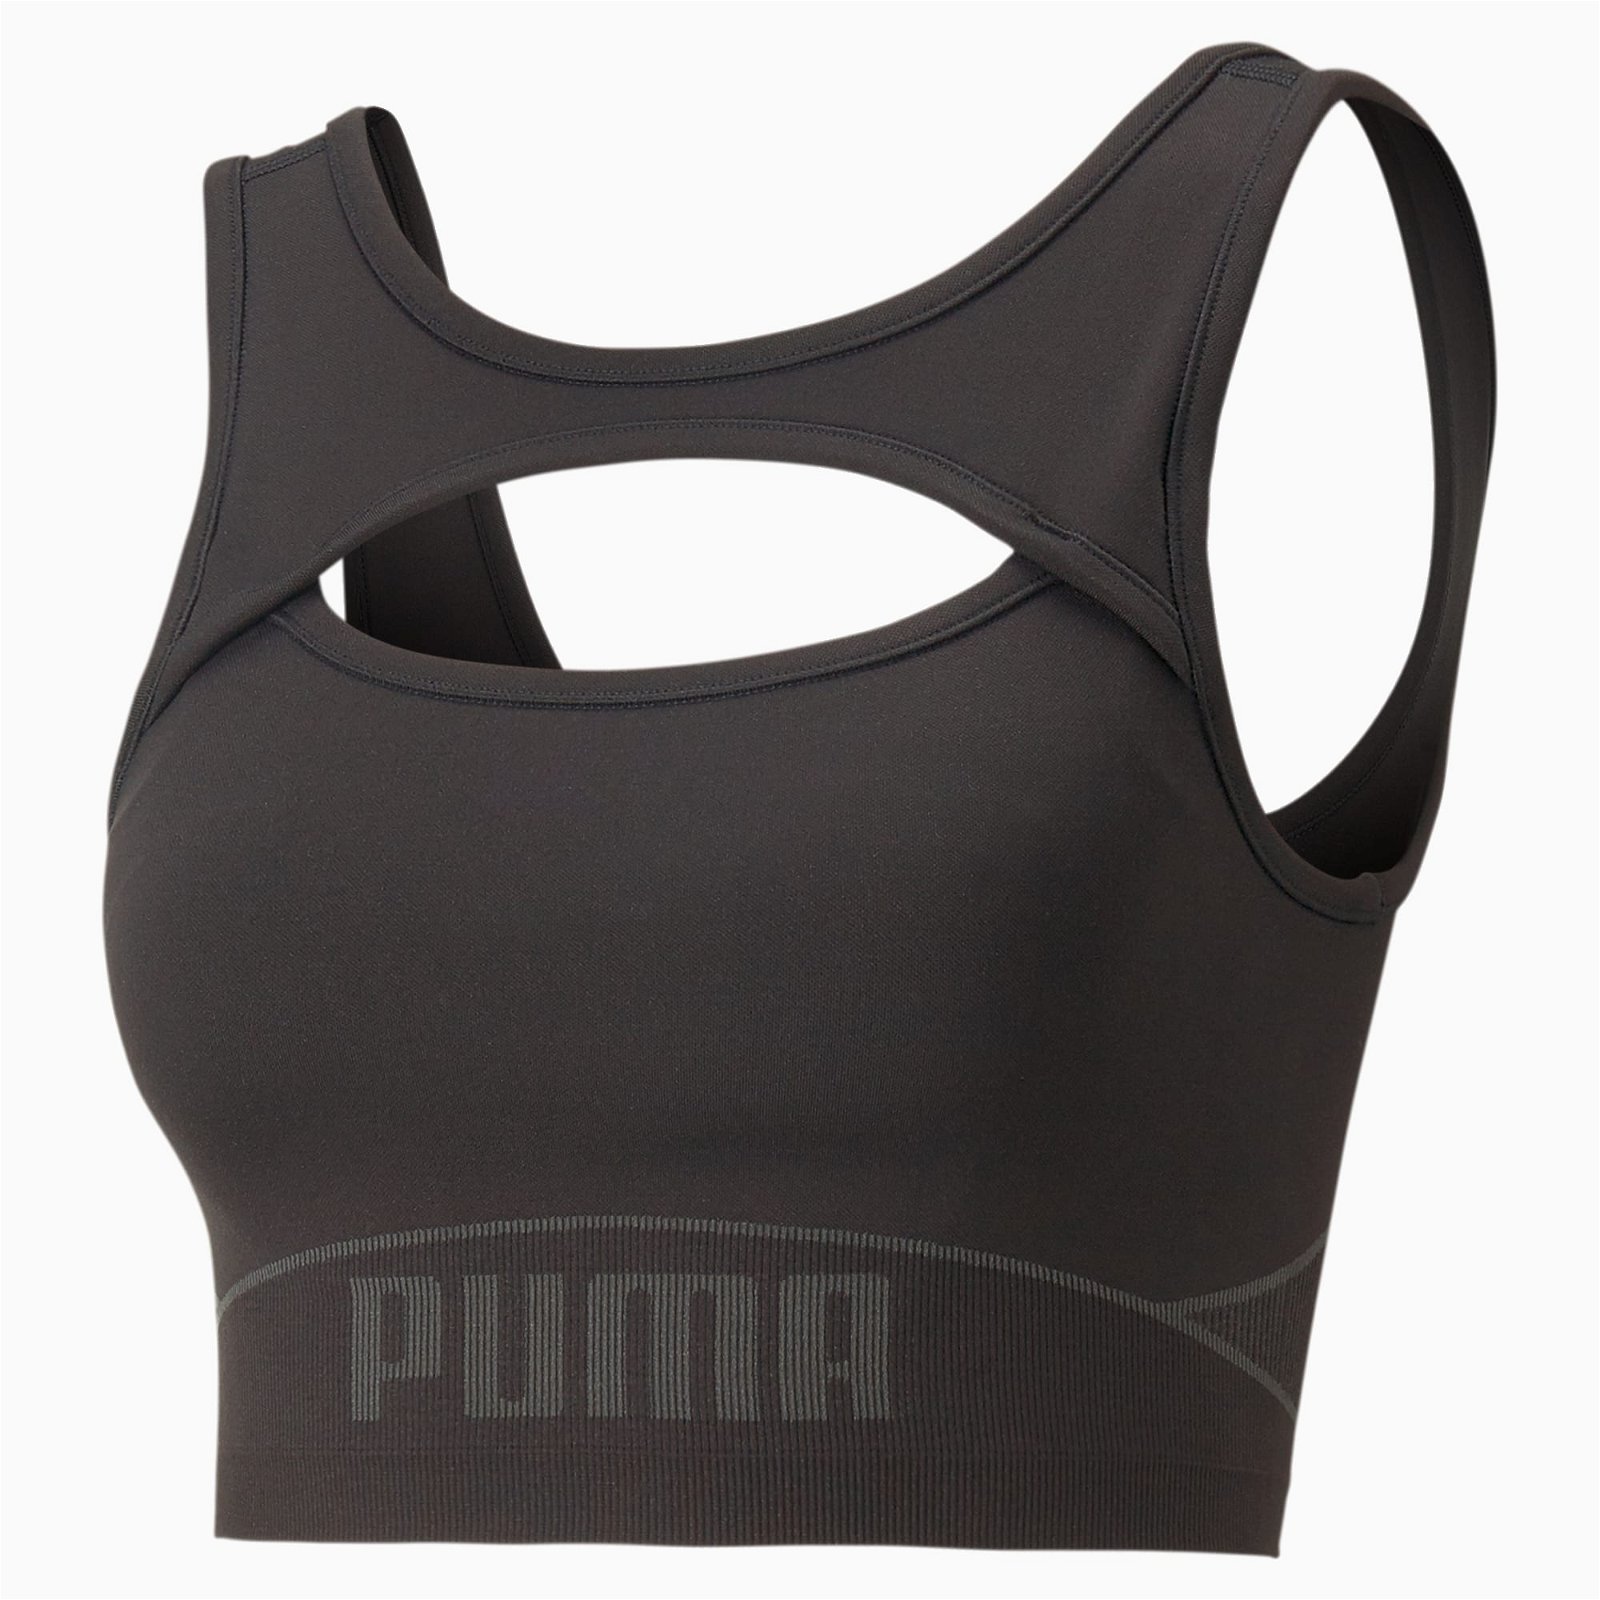 Buy Puma LOW IMPACT PUMA STRONG STRAPPY - Black